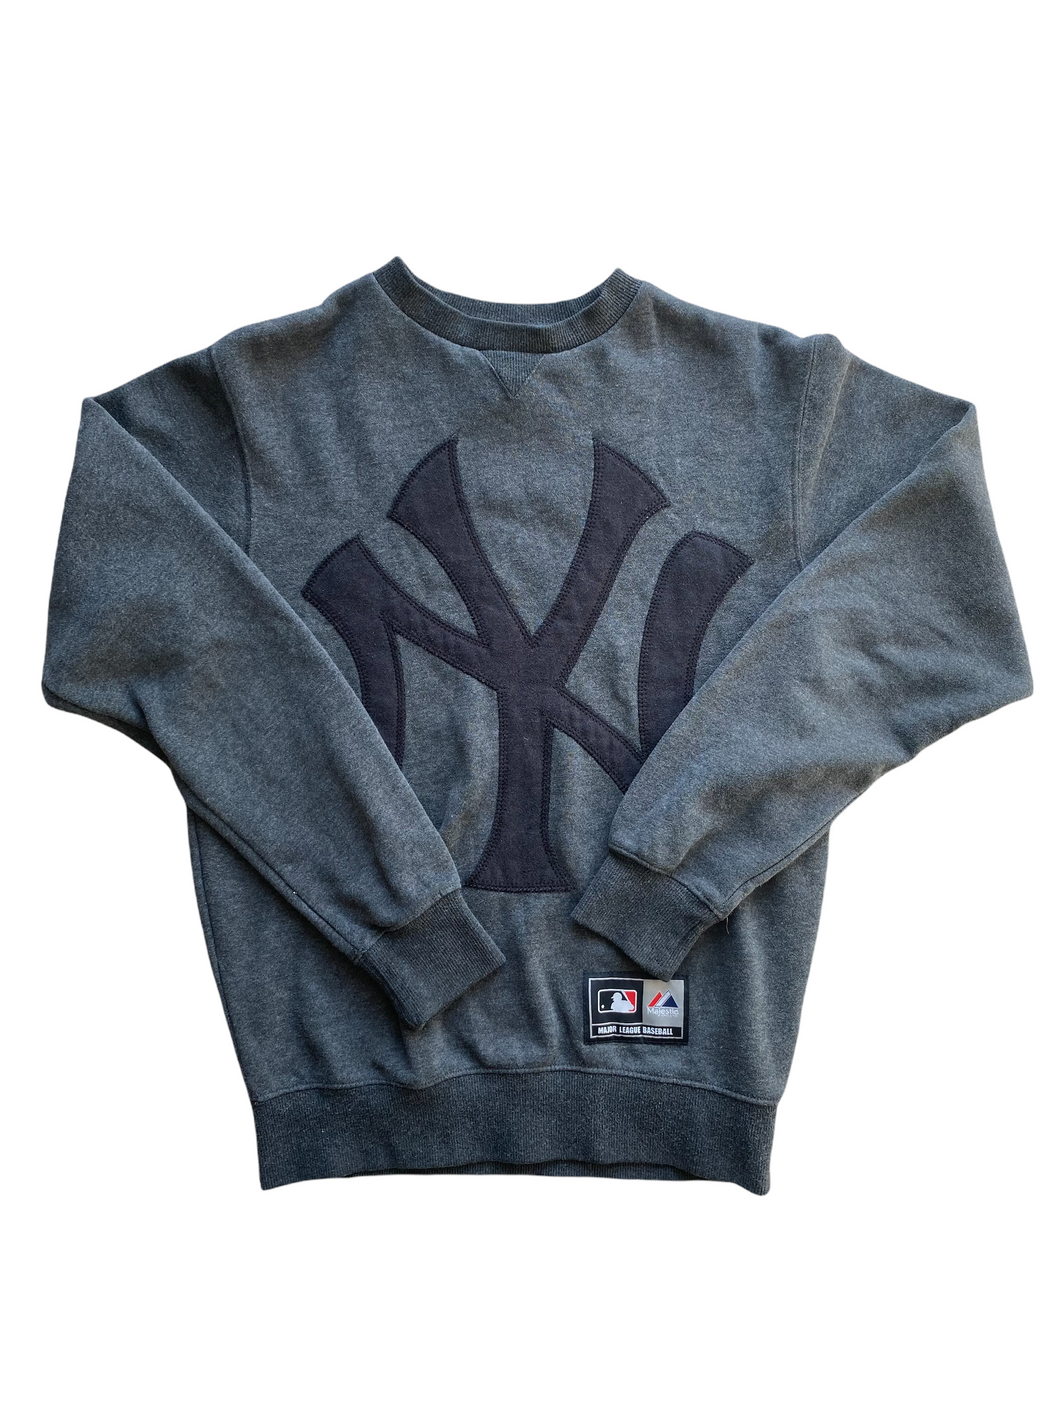 major league baseball sweater 